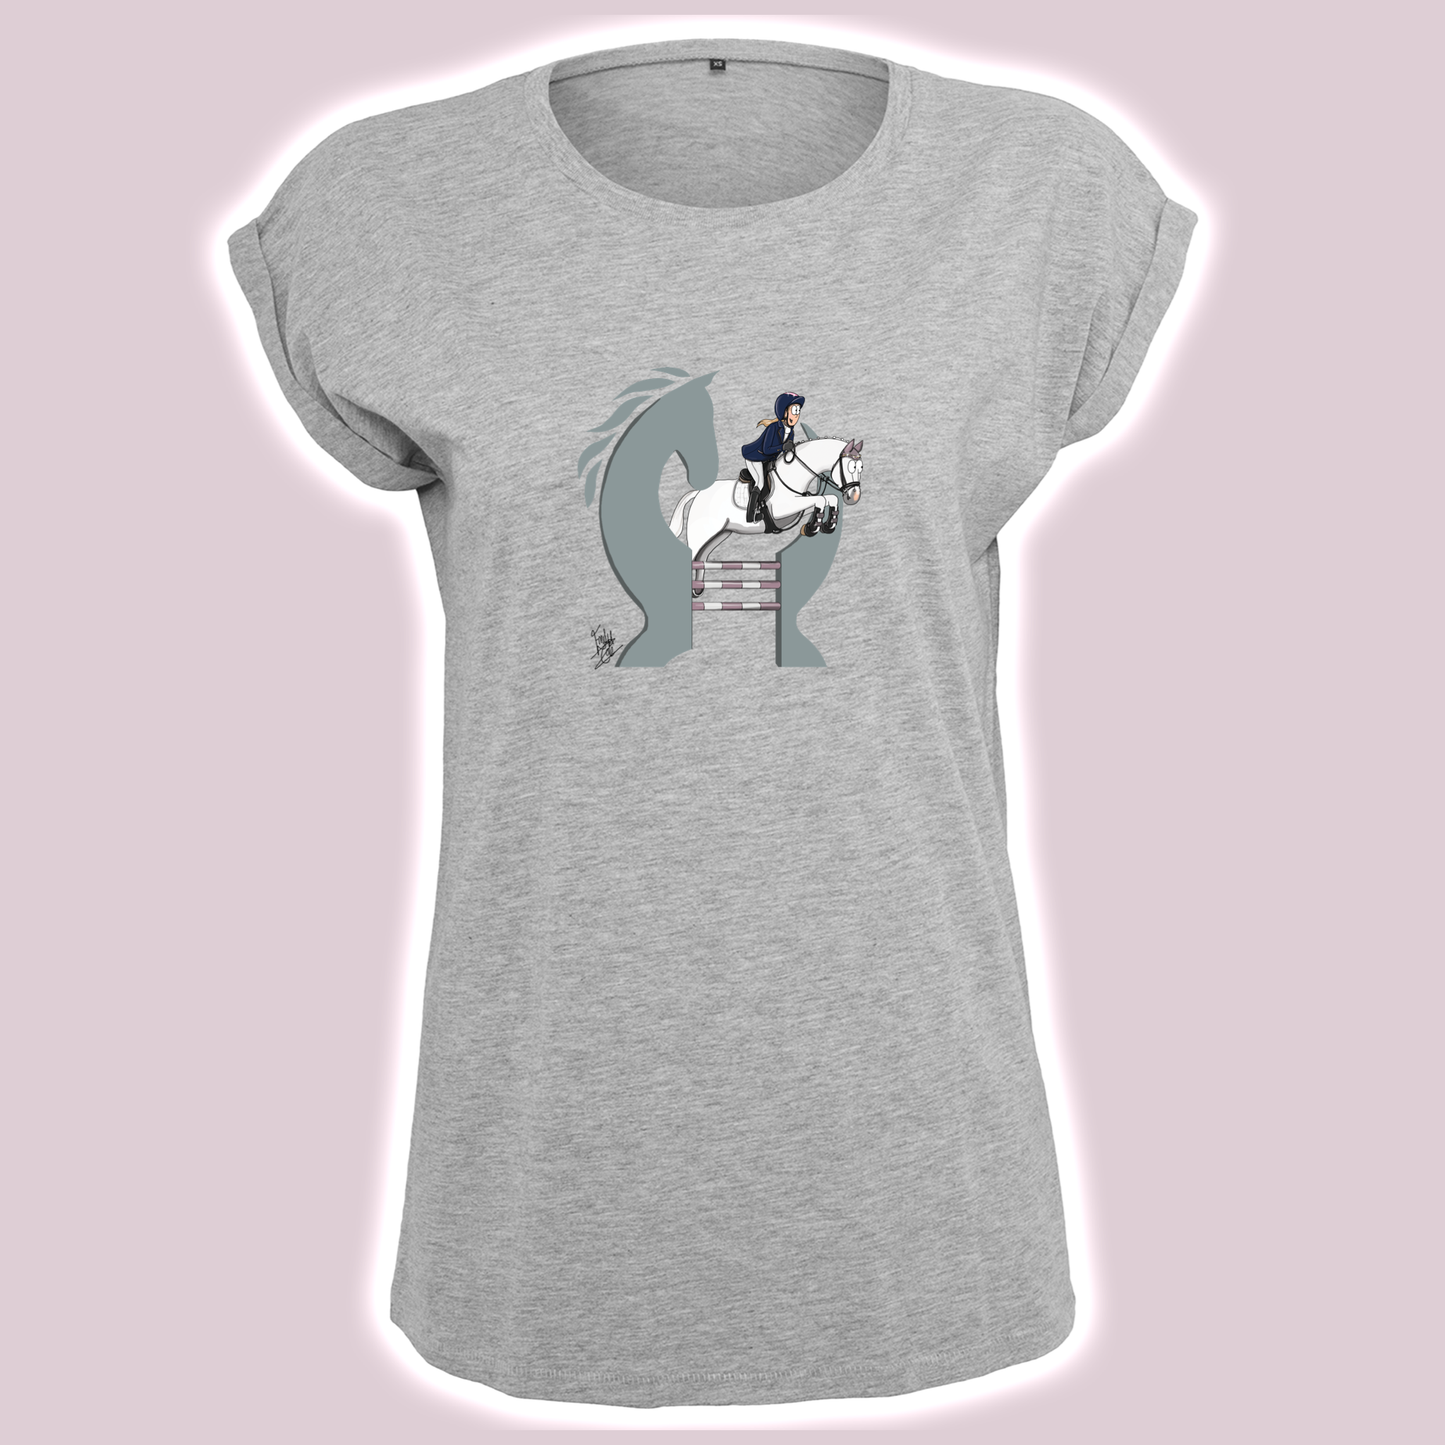 Equiboodle Emily Cole Hotshot T Shirt - Show Jumping Grey